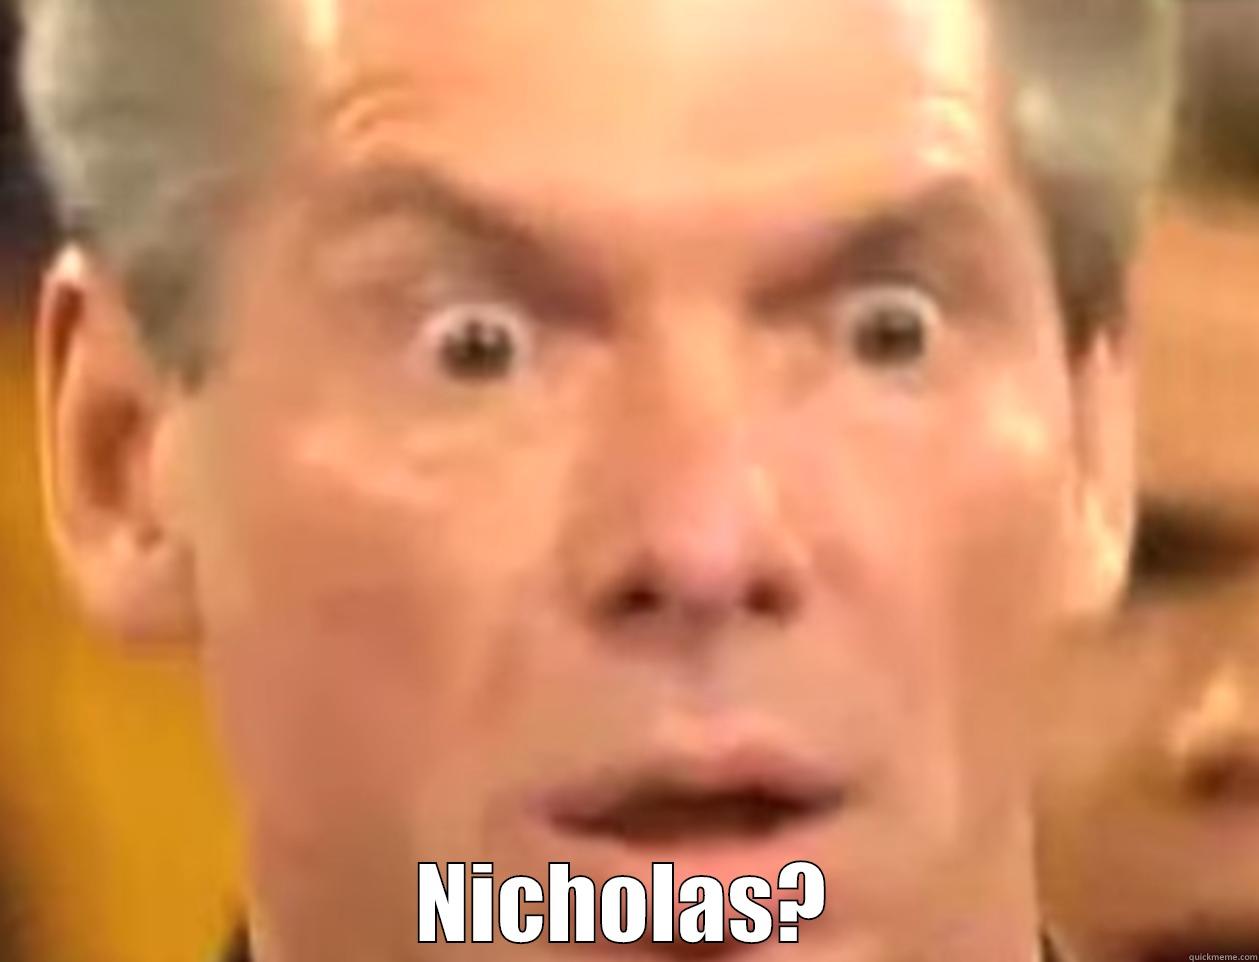  NICHOLAS? Misc